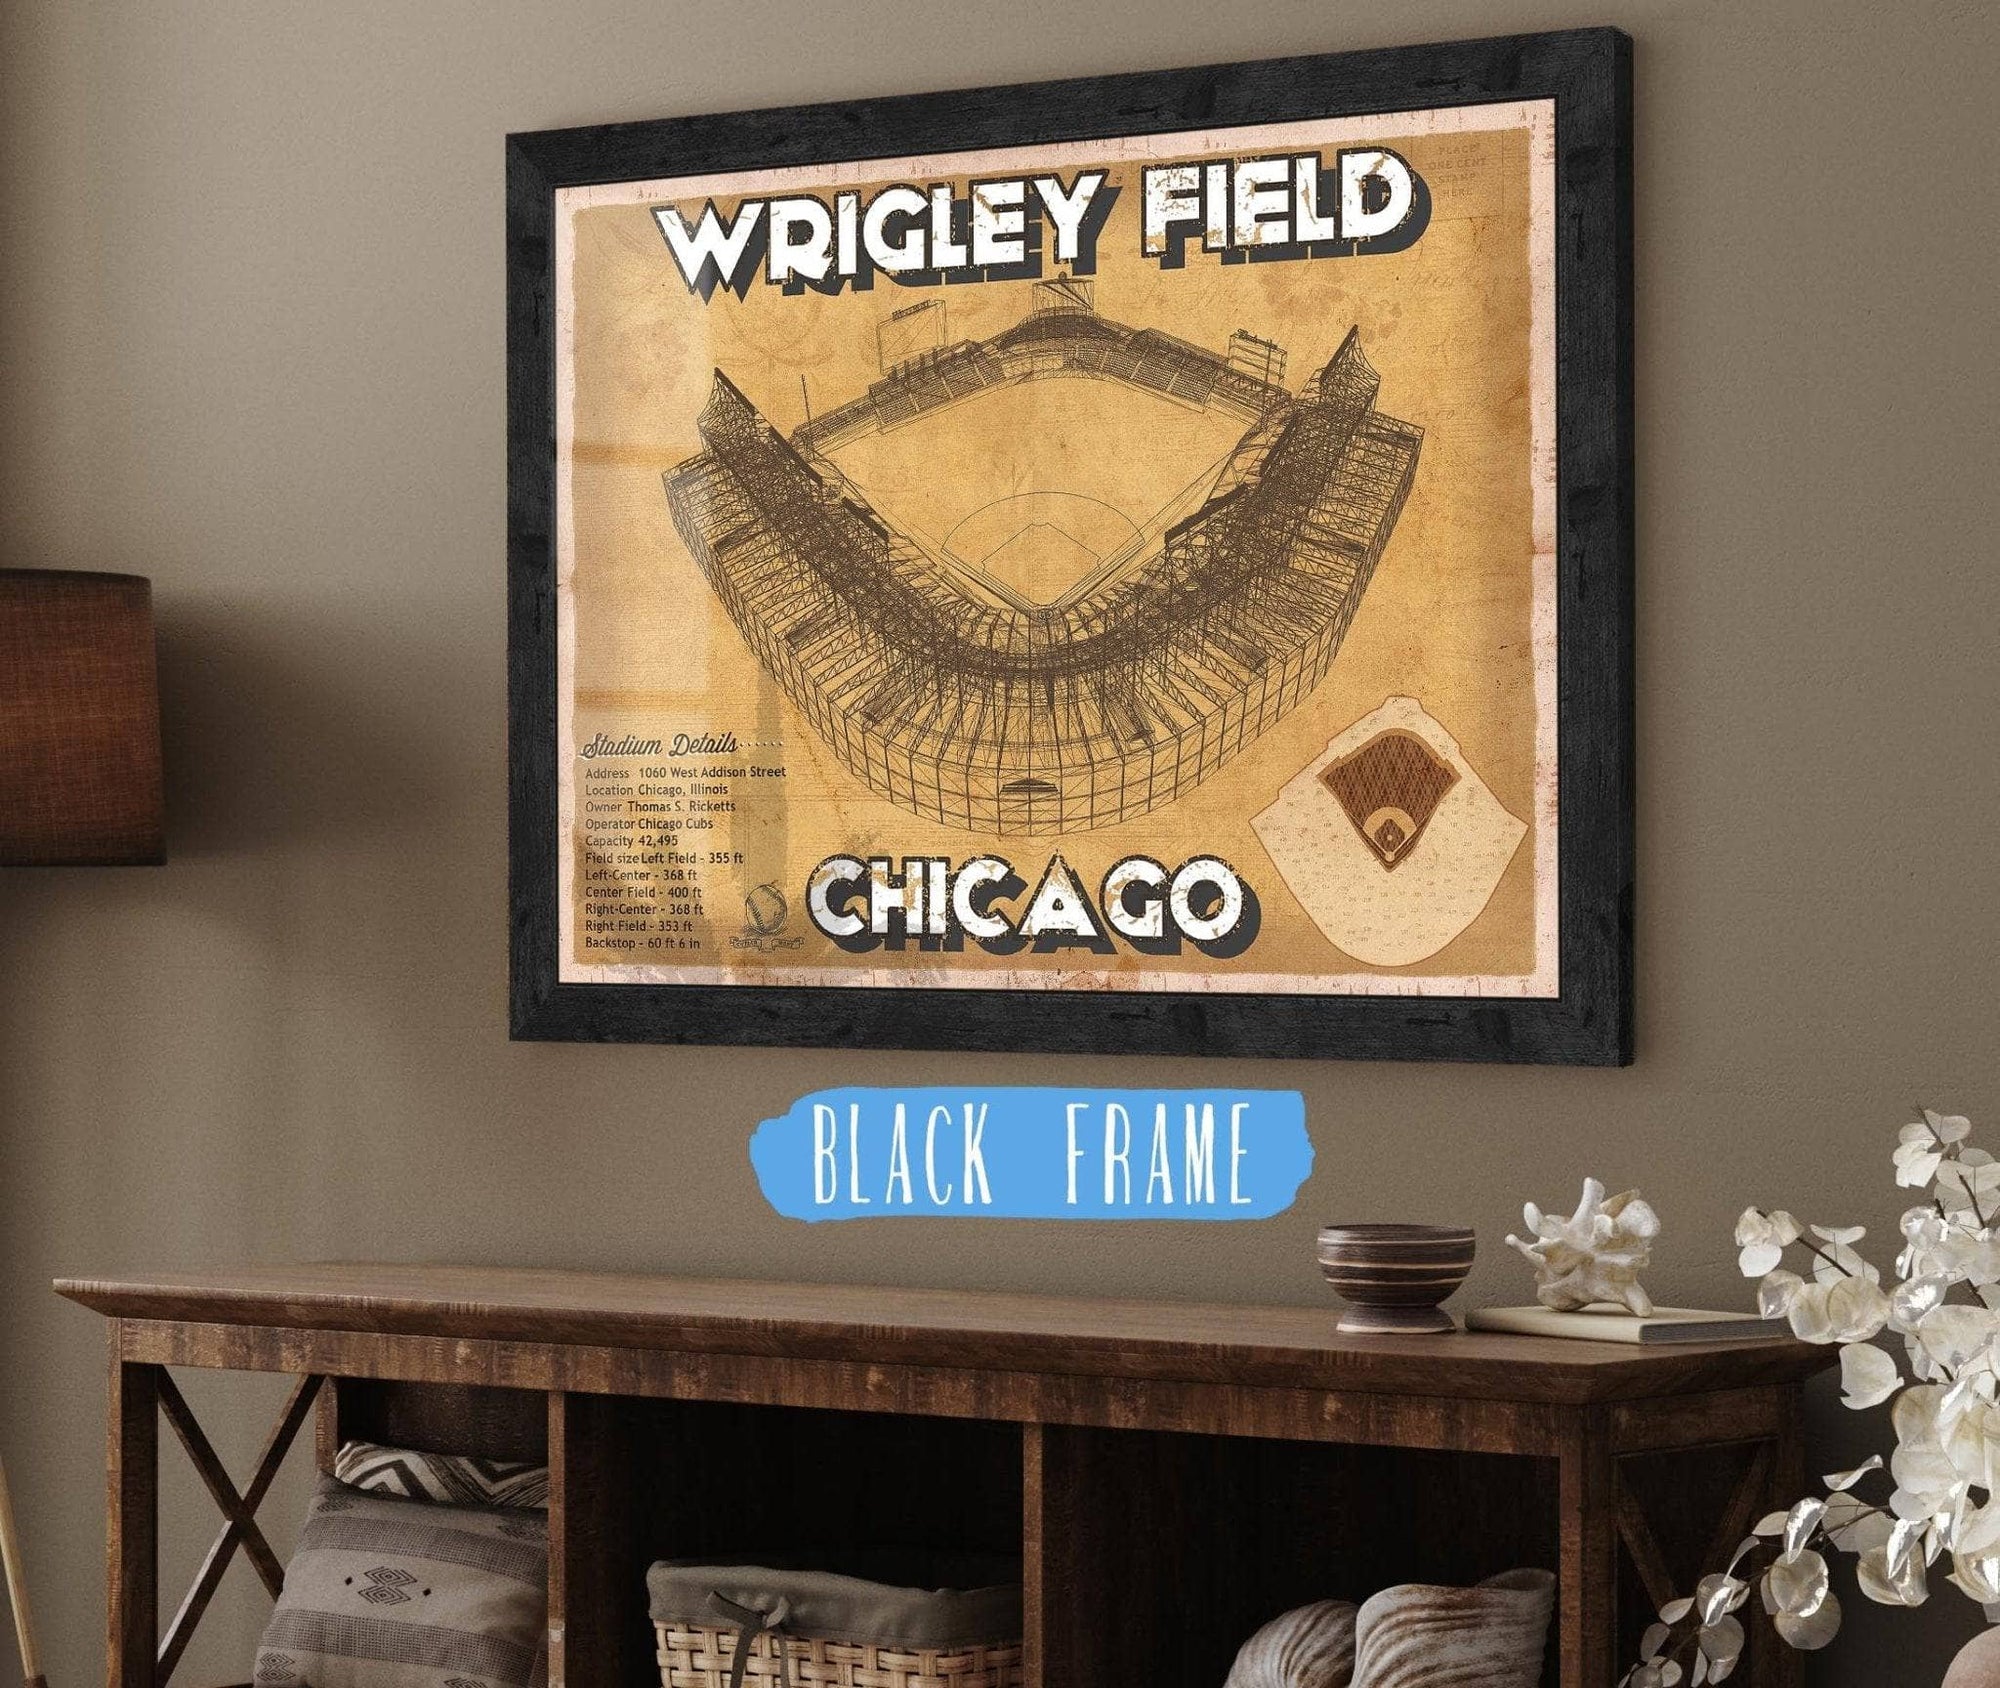 Cutler West 14" x 11" / Black Frame Wrigley Field Print - Chicago Cubs Baseball Print 703108870-14"-x-11"6794